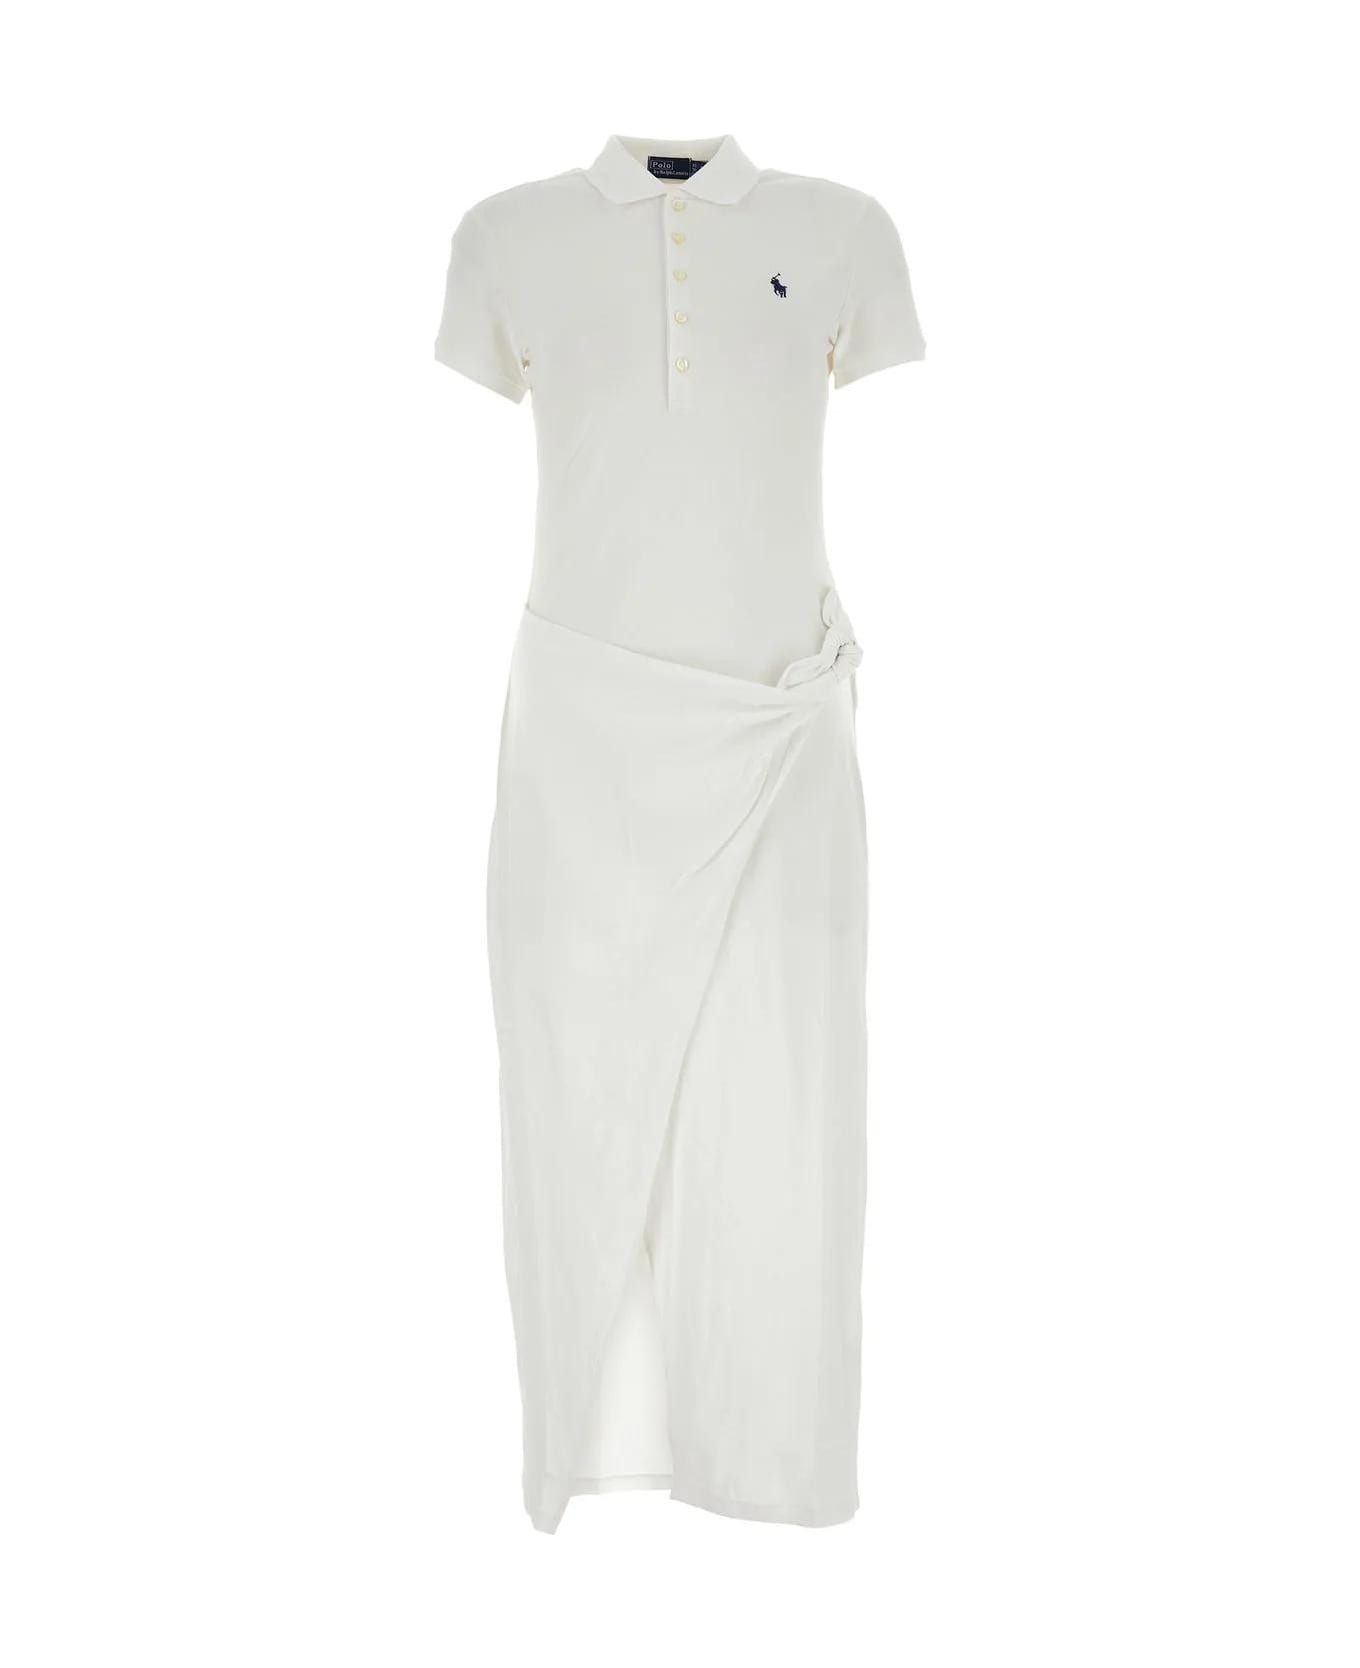 Polo Ralph Lauren White Stretch Piquet Polo Dress - White